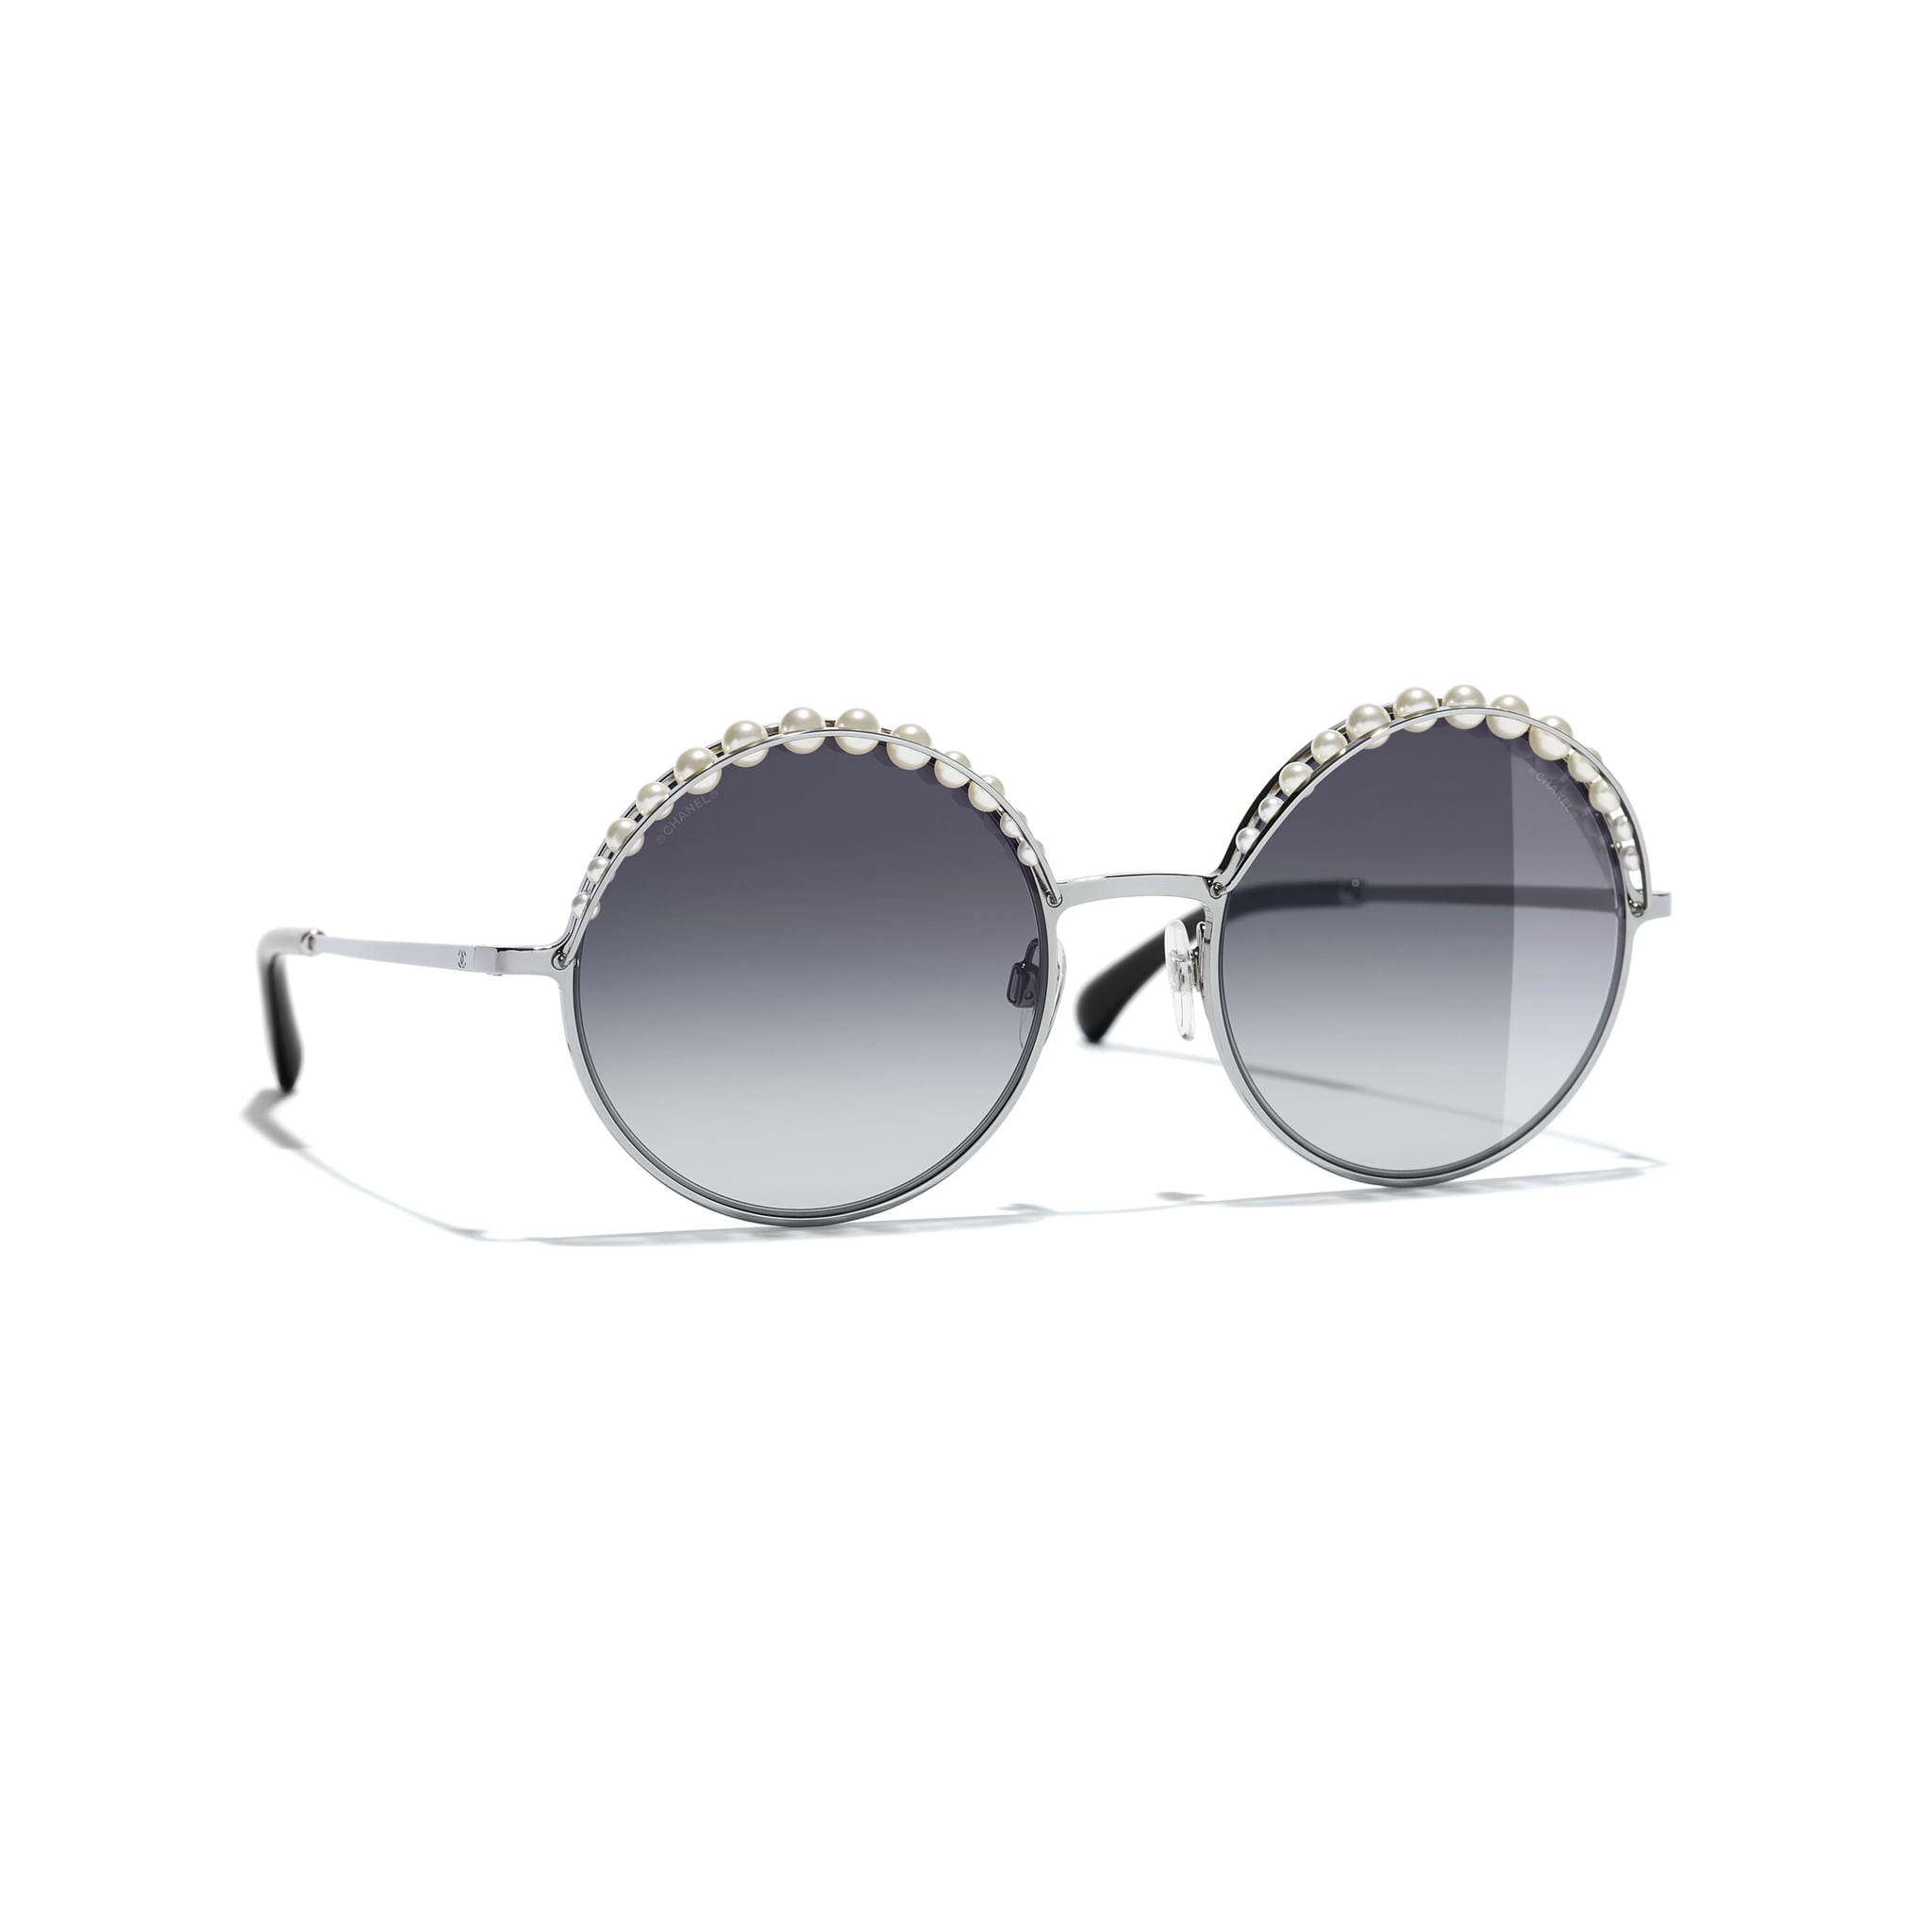 Sunglasses Square Sunglasses acetate  imitation pearls  Fashion  CHANEL